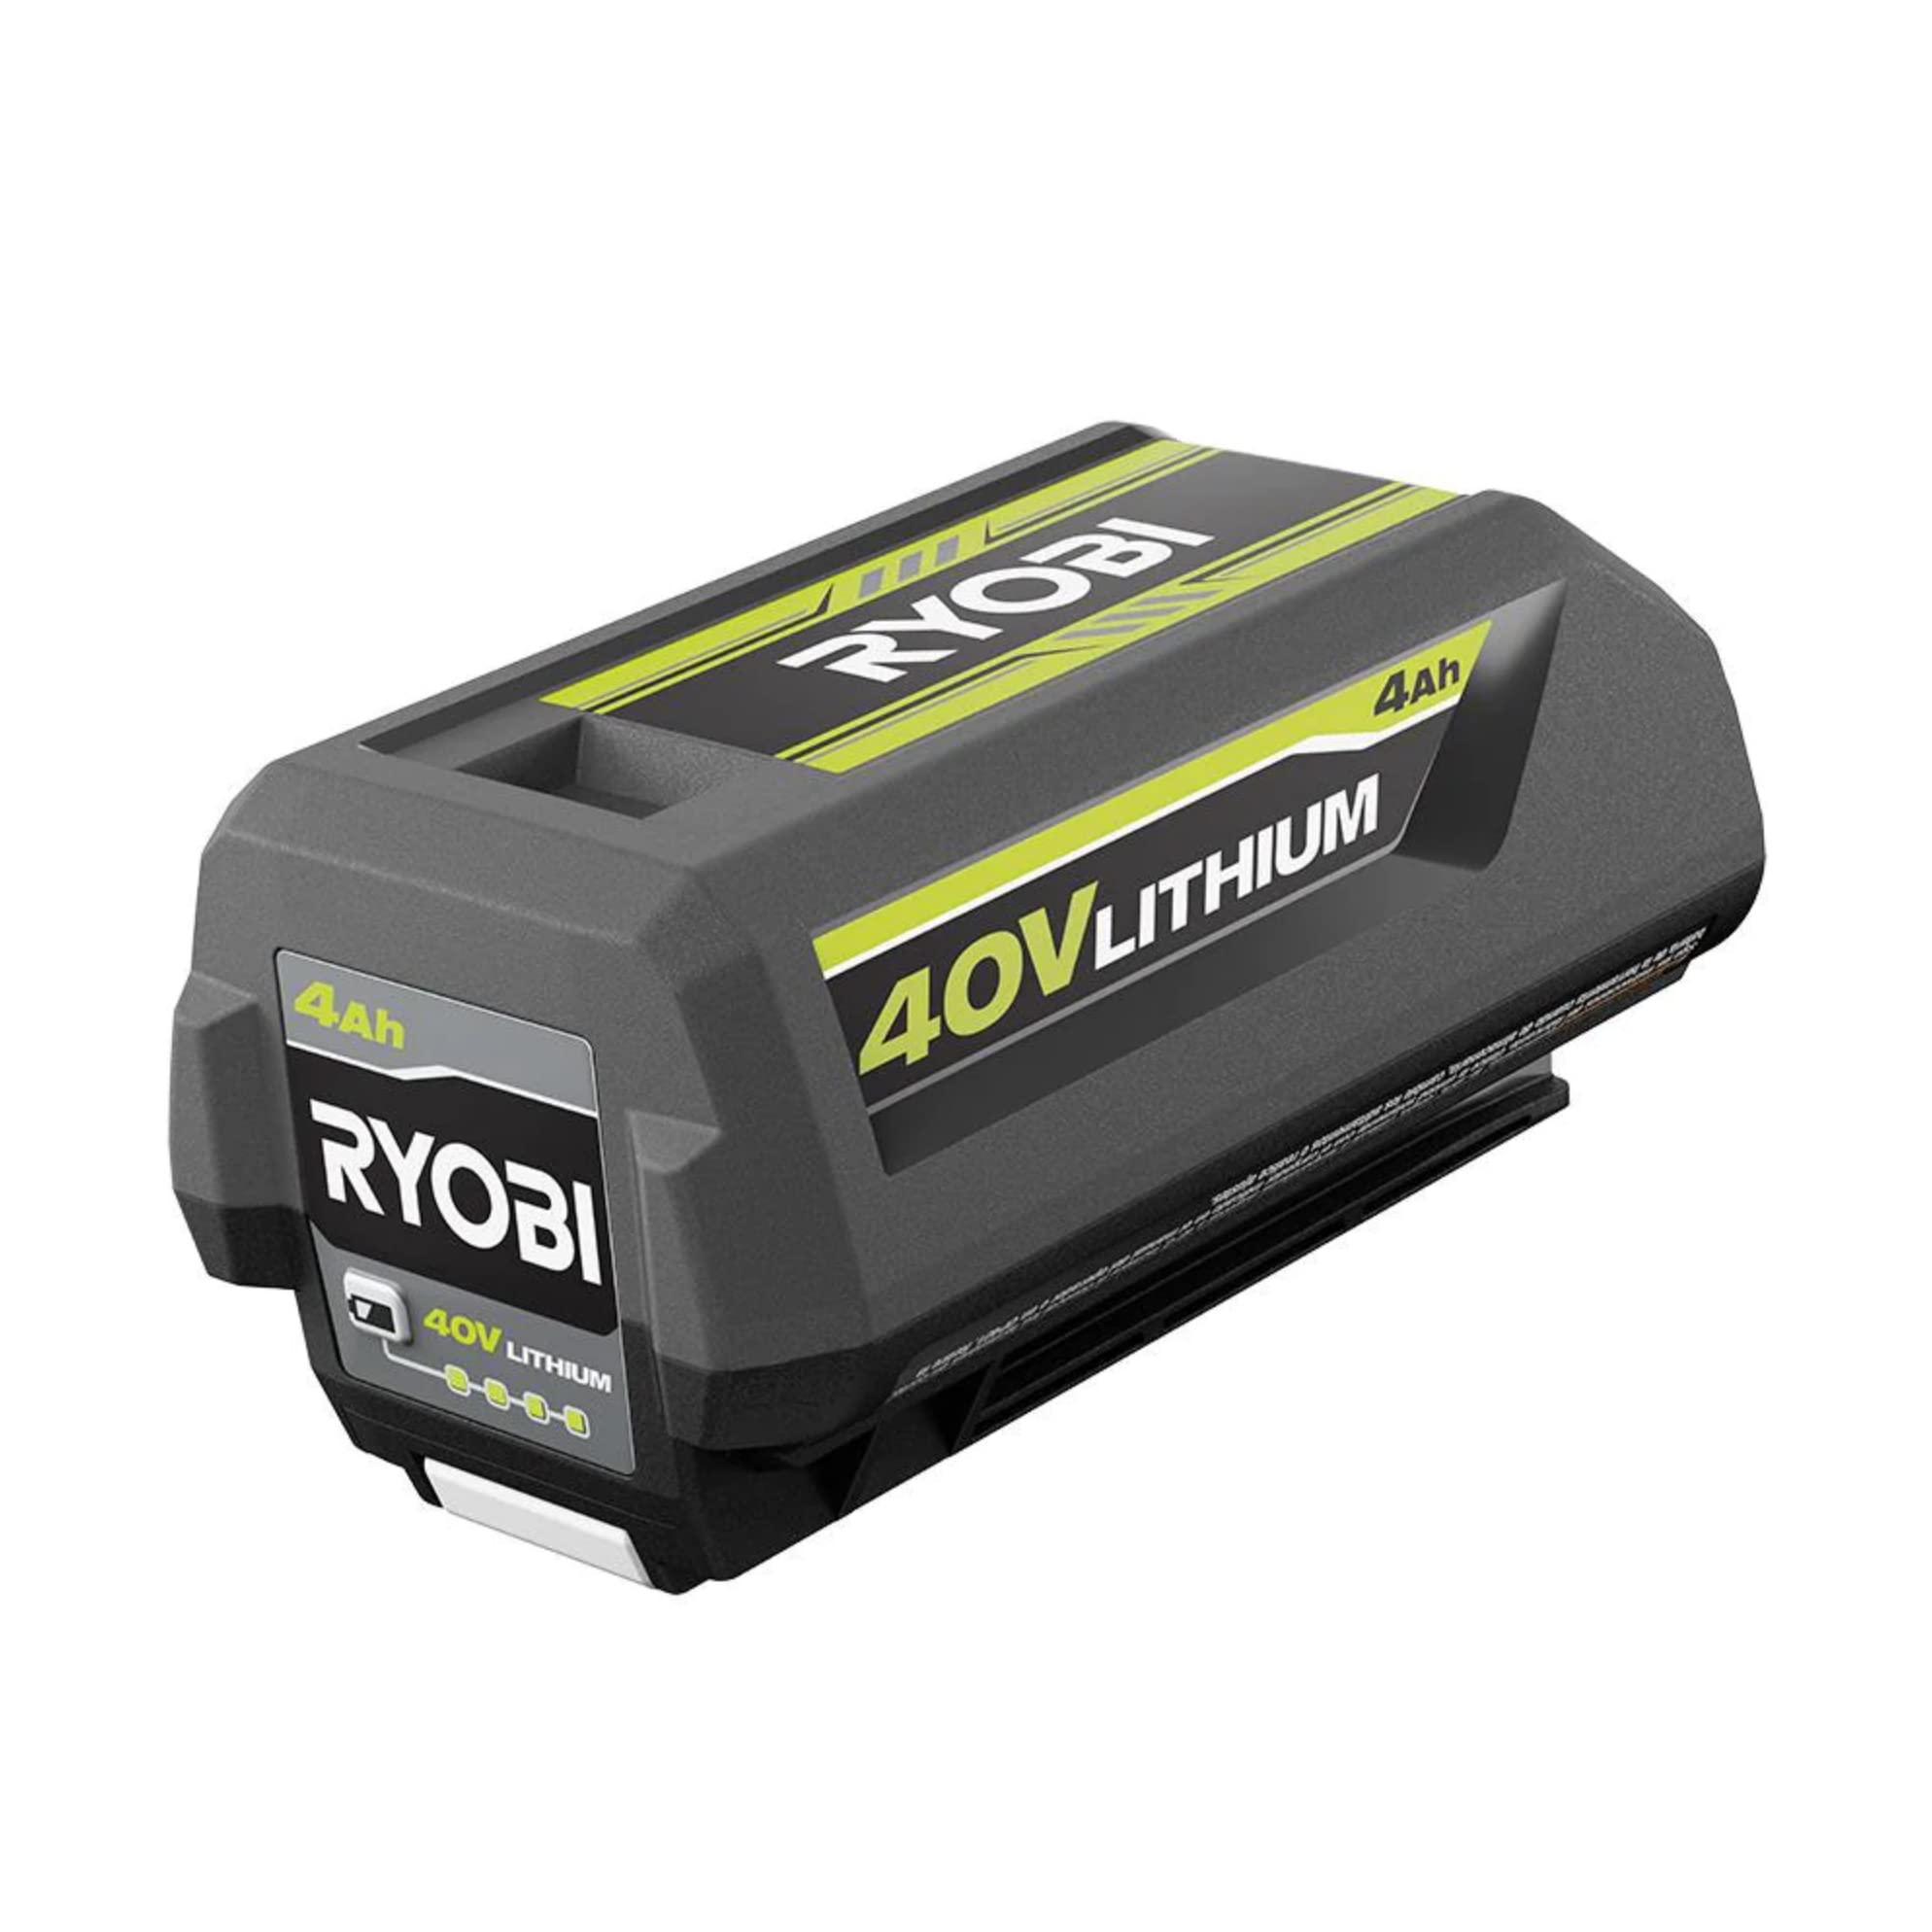 Ryobi 40V 4.0 Ah लिथियम-आयन बैटरी OP4040